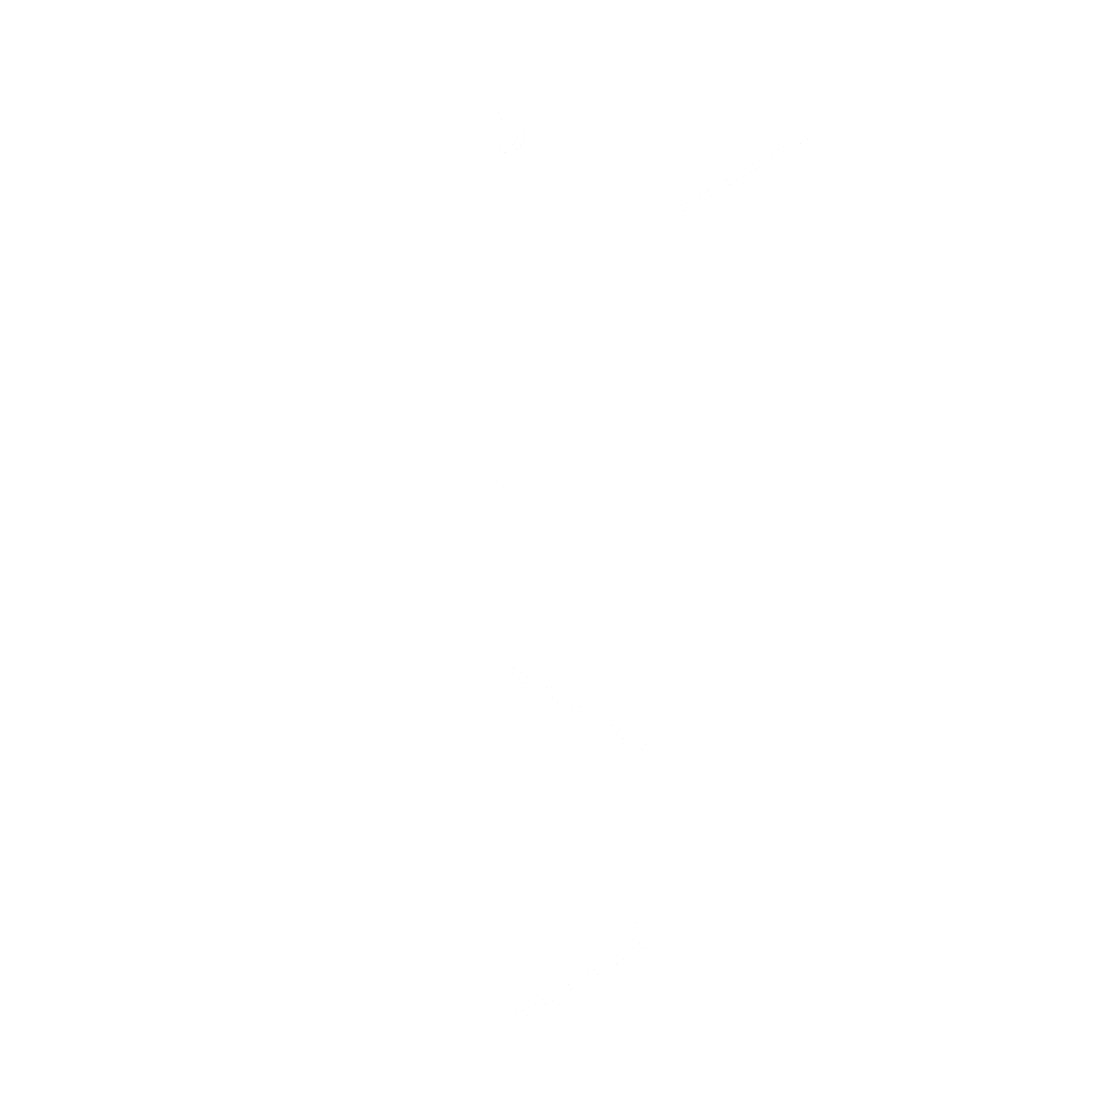 Benzylidene Acetone